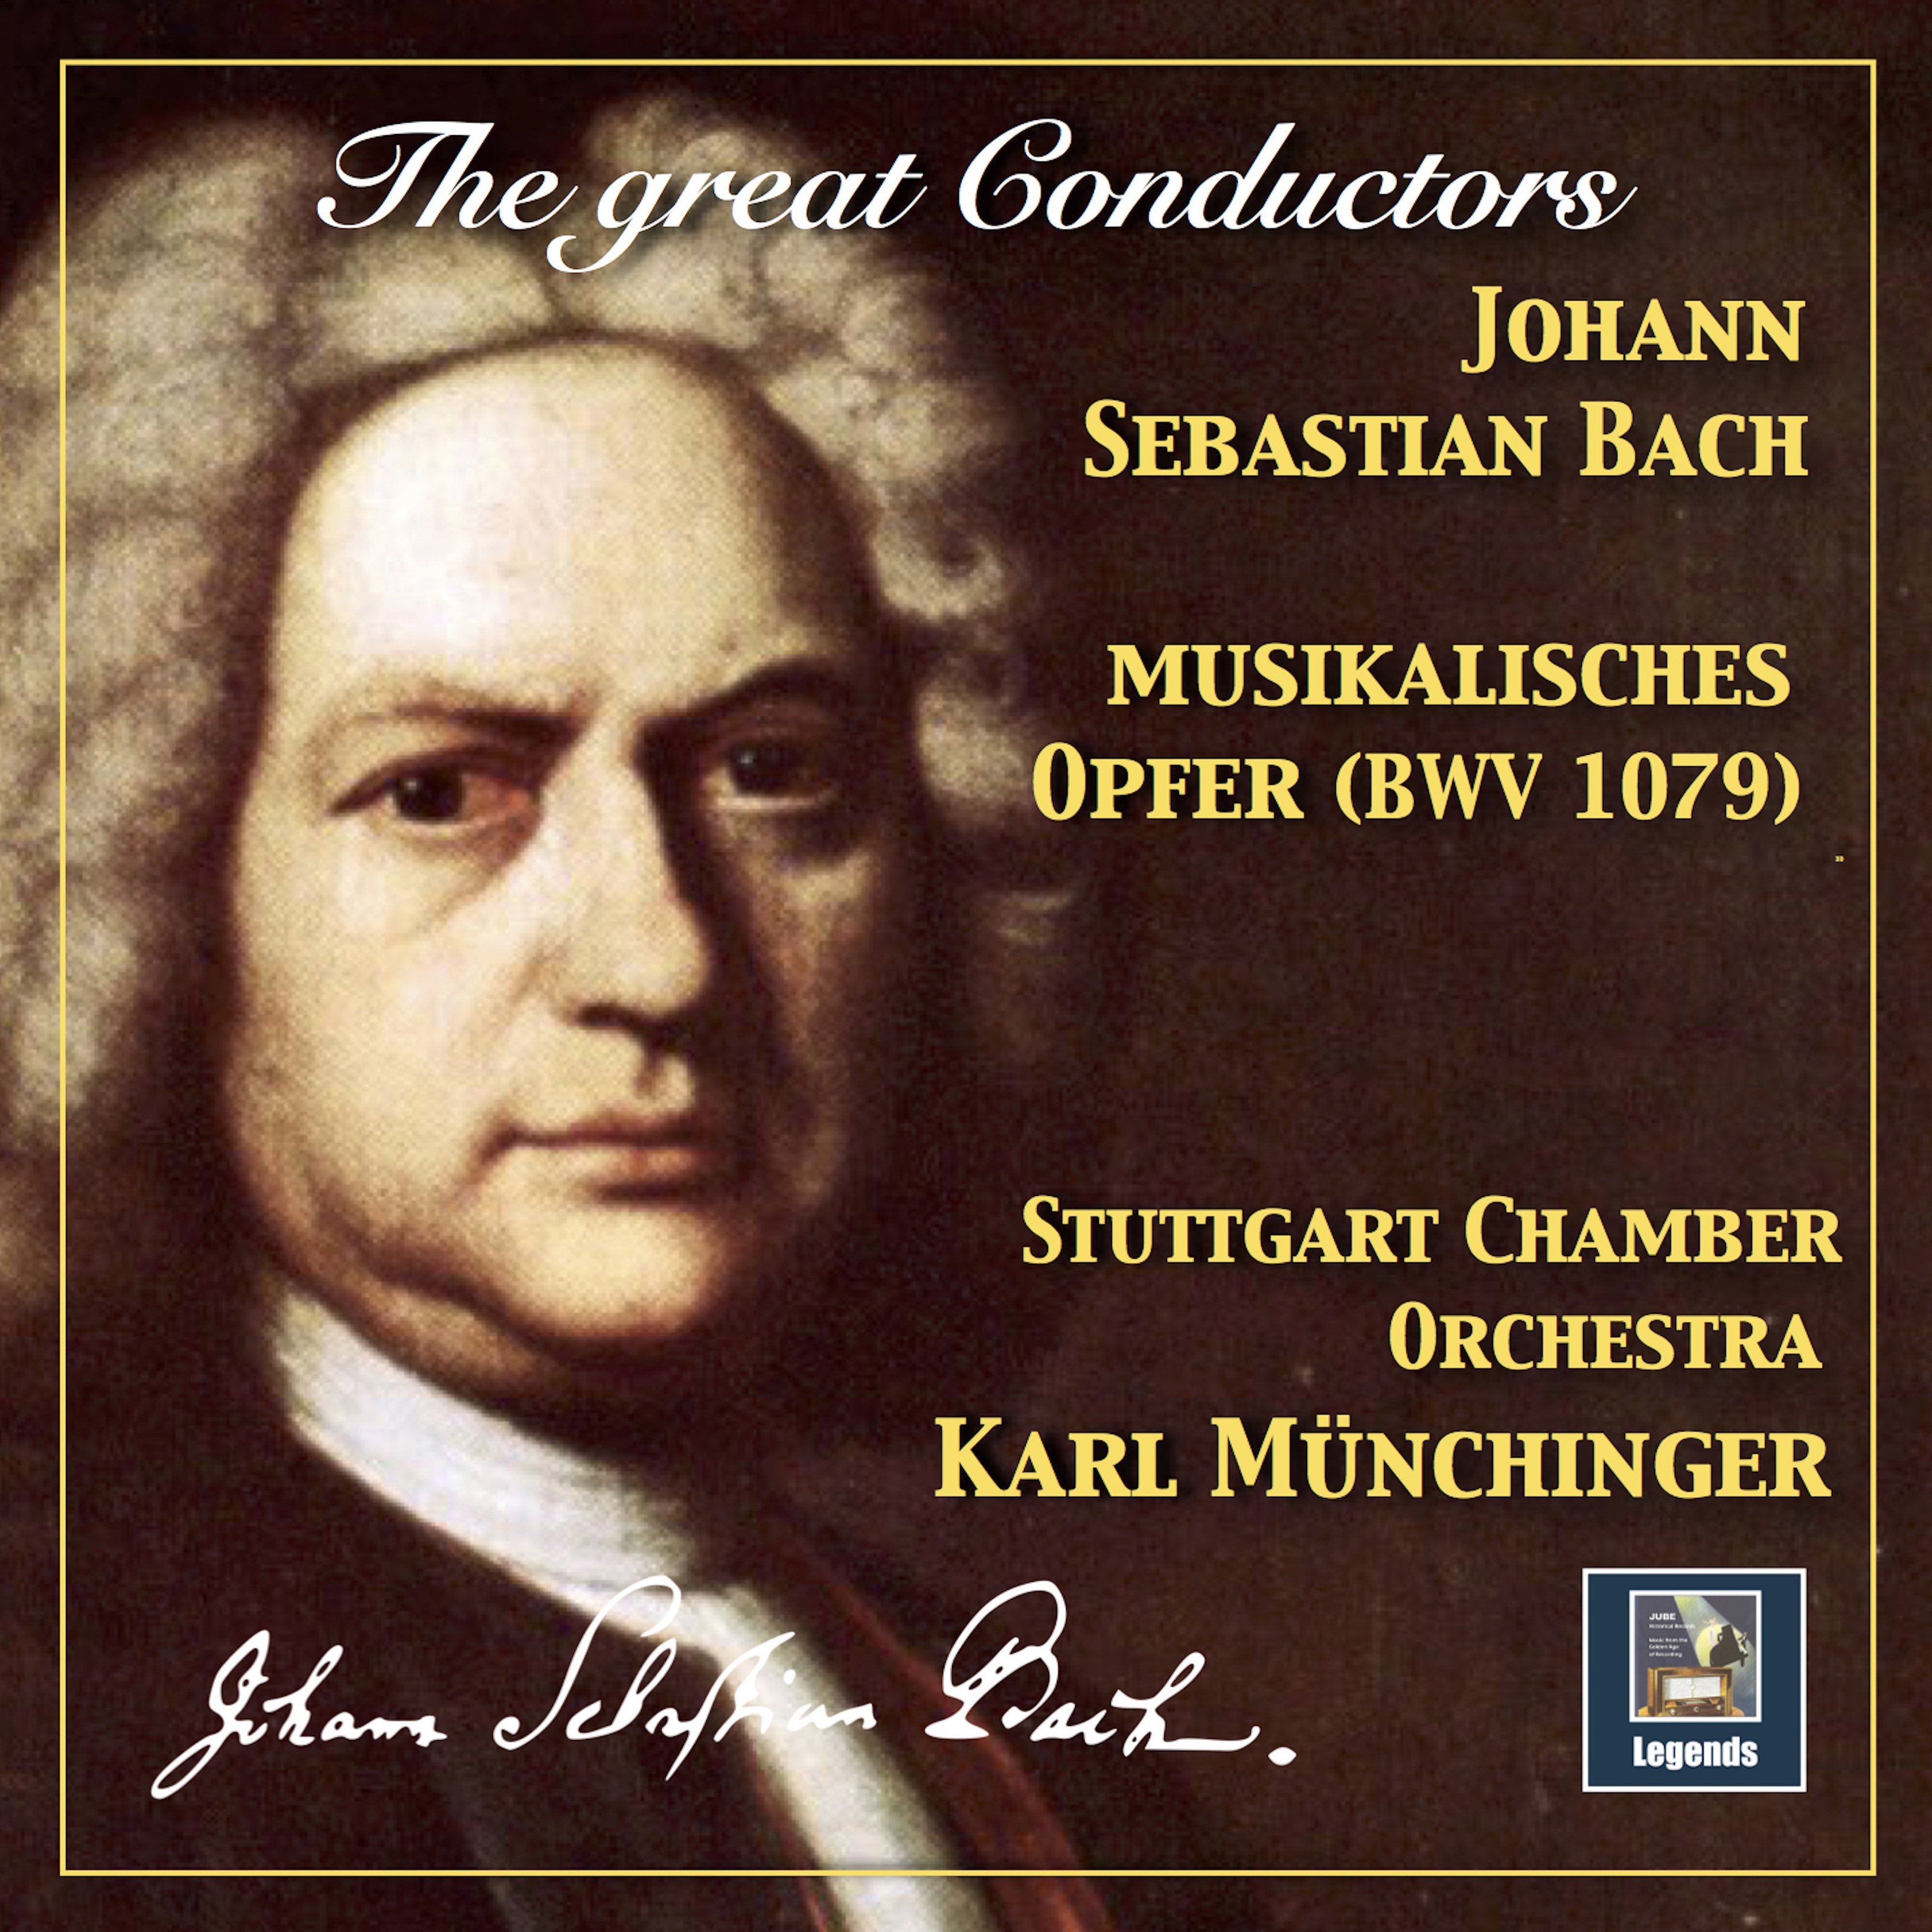 Musikalisches Opfer, BWV 1079 Arr. K. Mü nchinger for Chamber Orchestra: Sonata a 3, Allegro 2